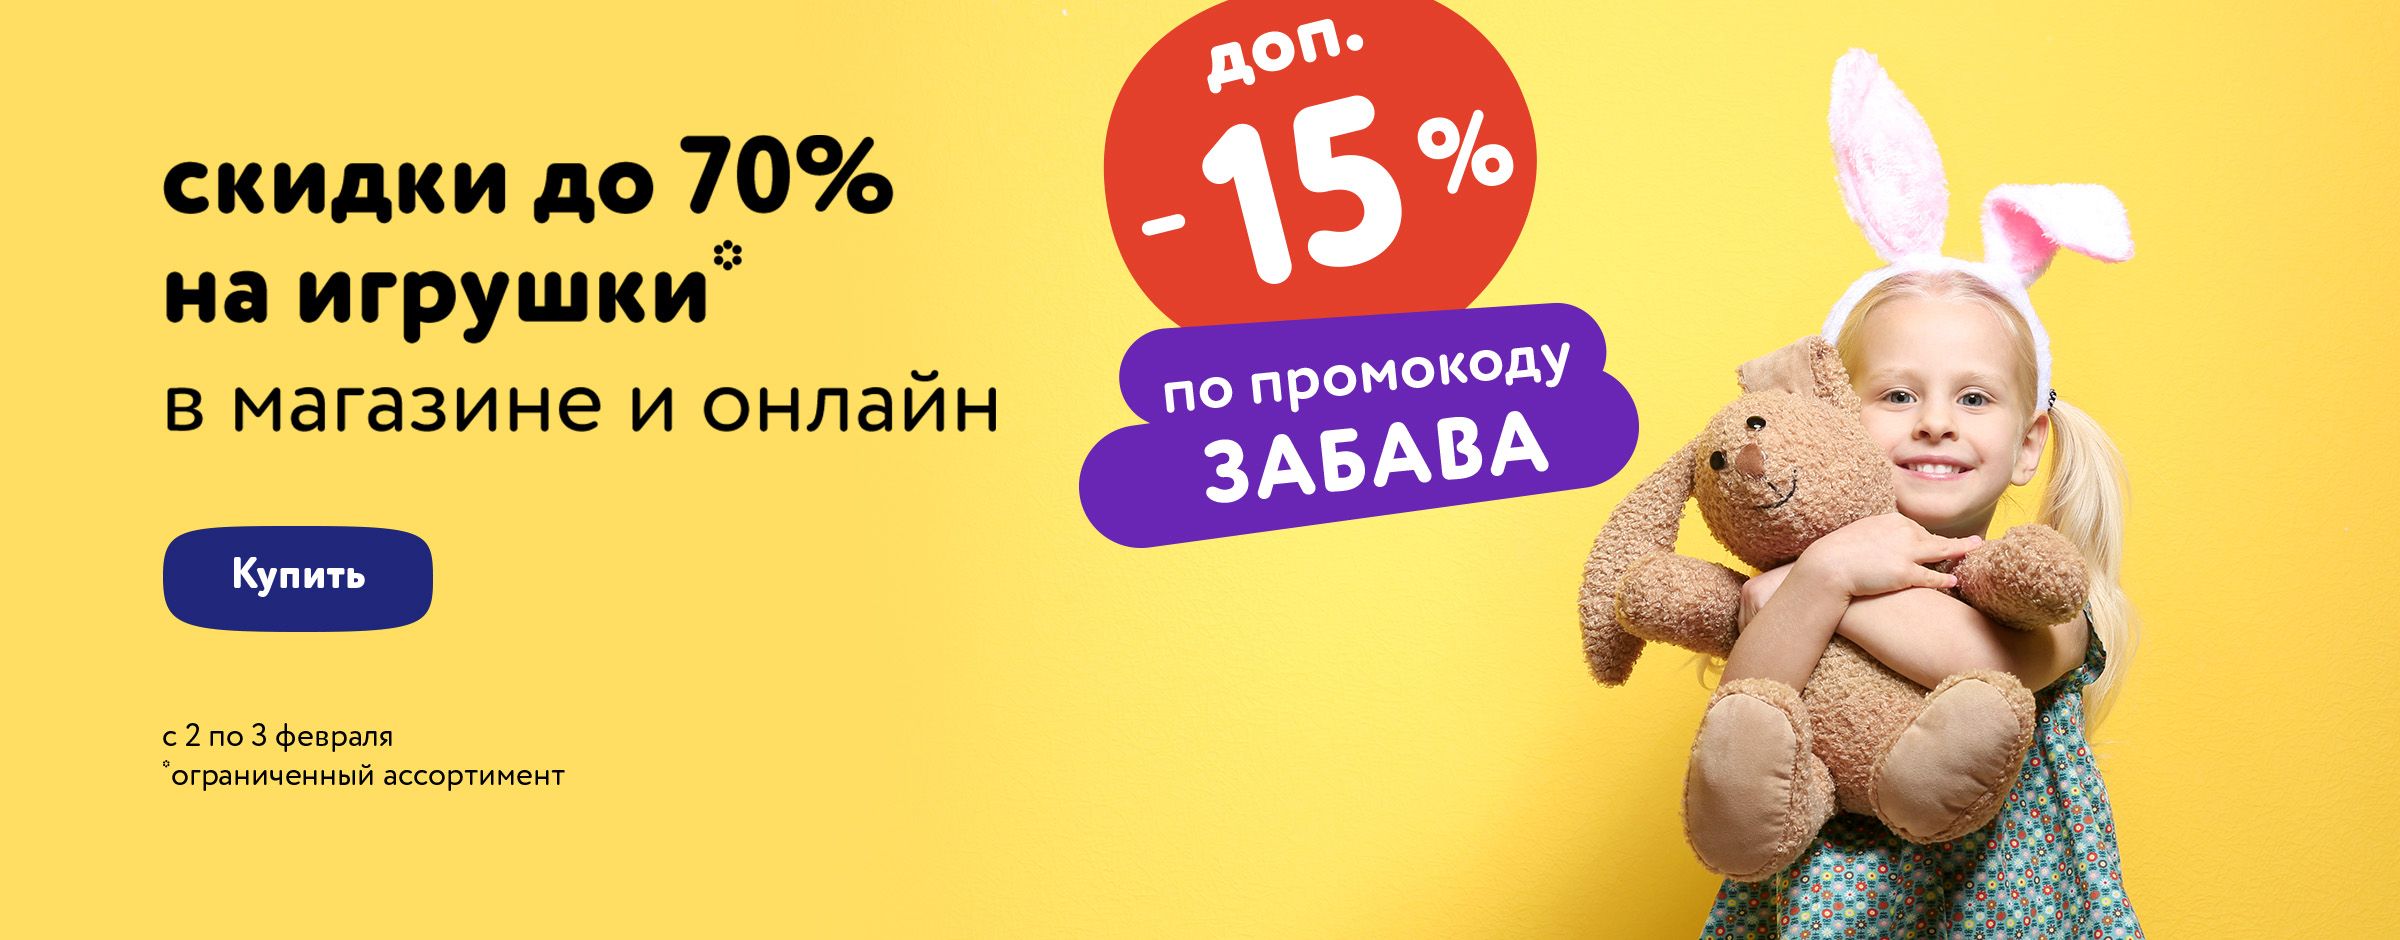 -15% по промокоду на игрушки_статика + категории